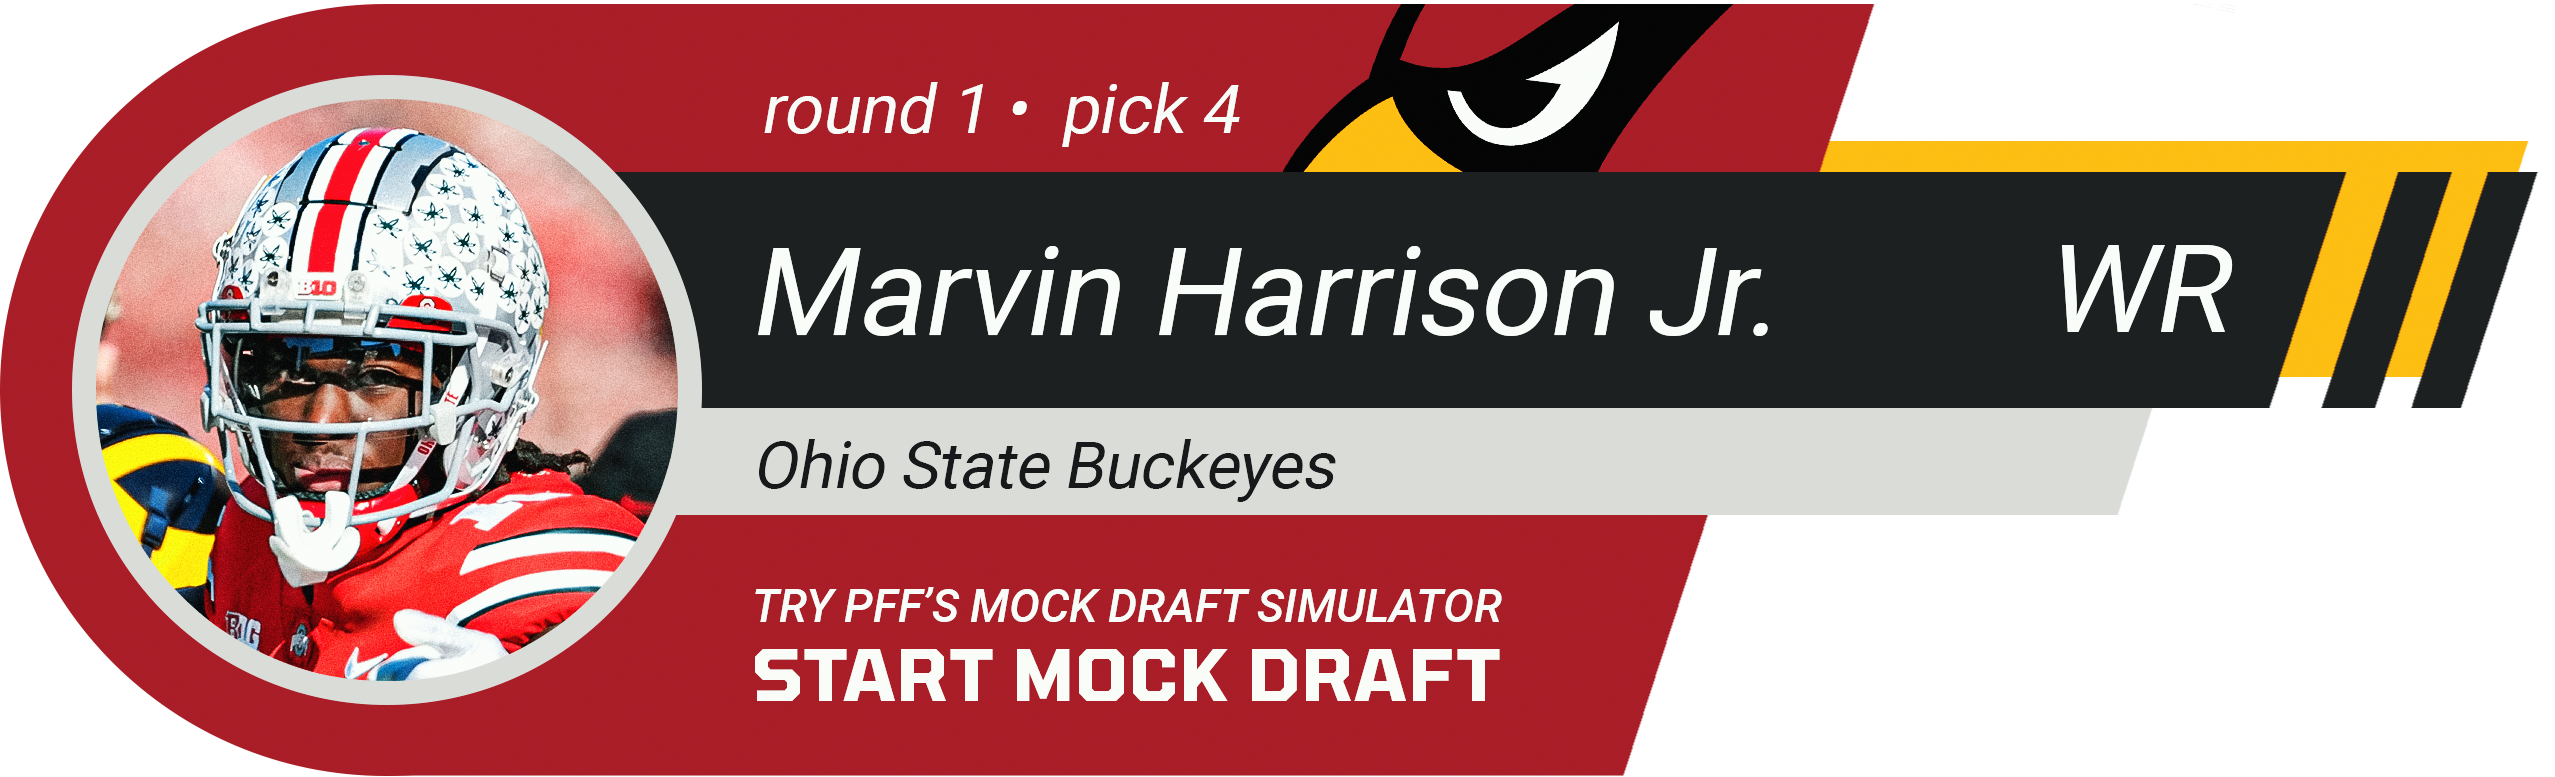 Arizona Cardinals: Marvin Harrison Jr., WR, Ohio State